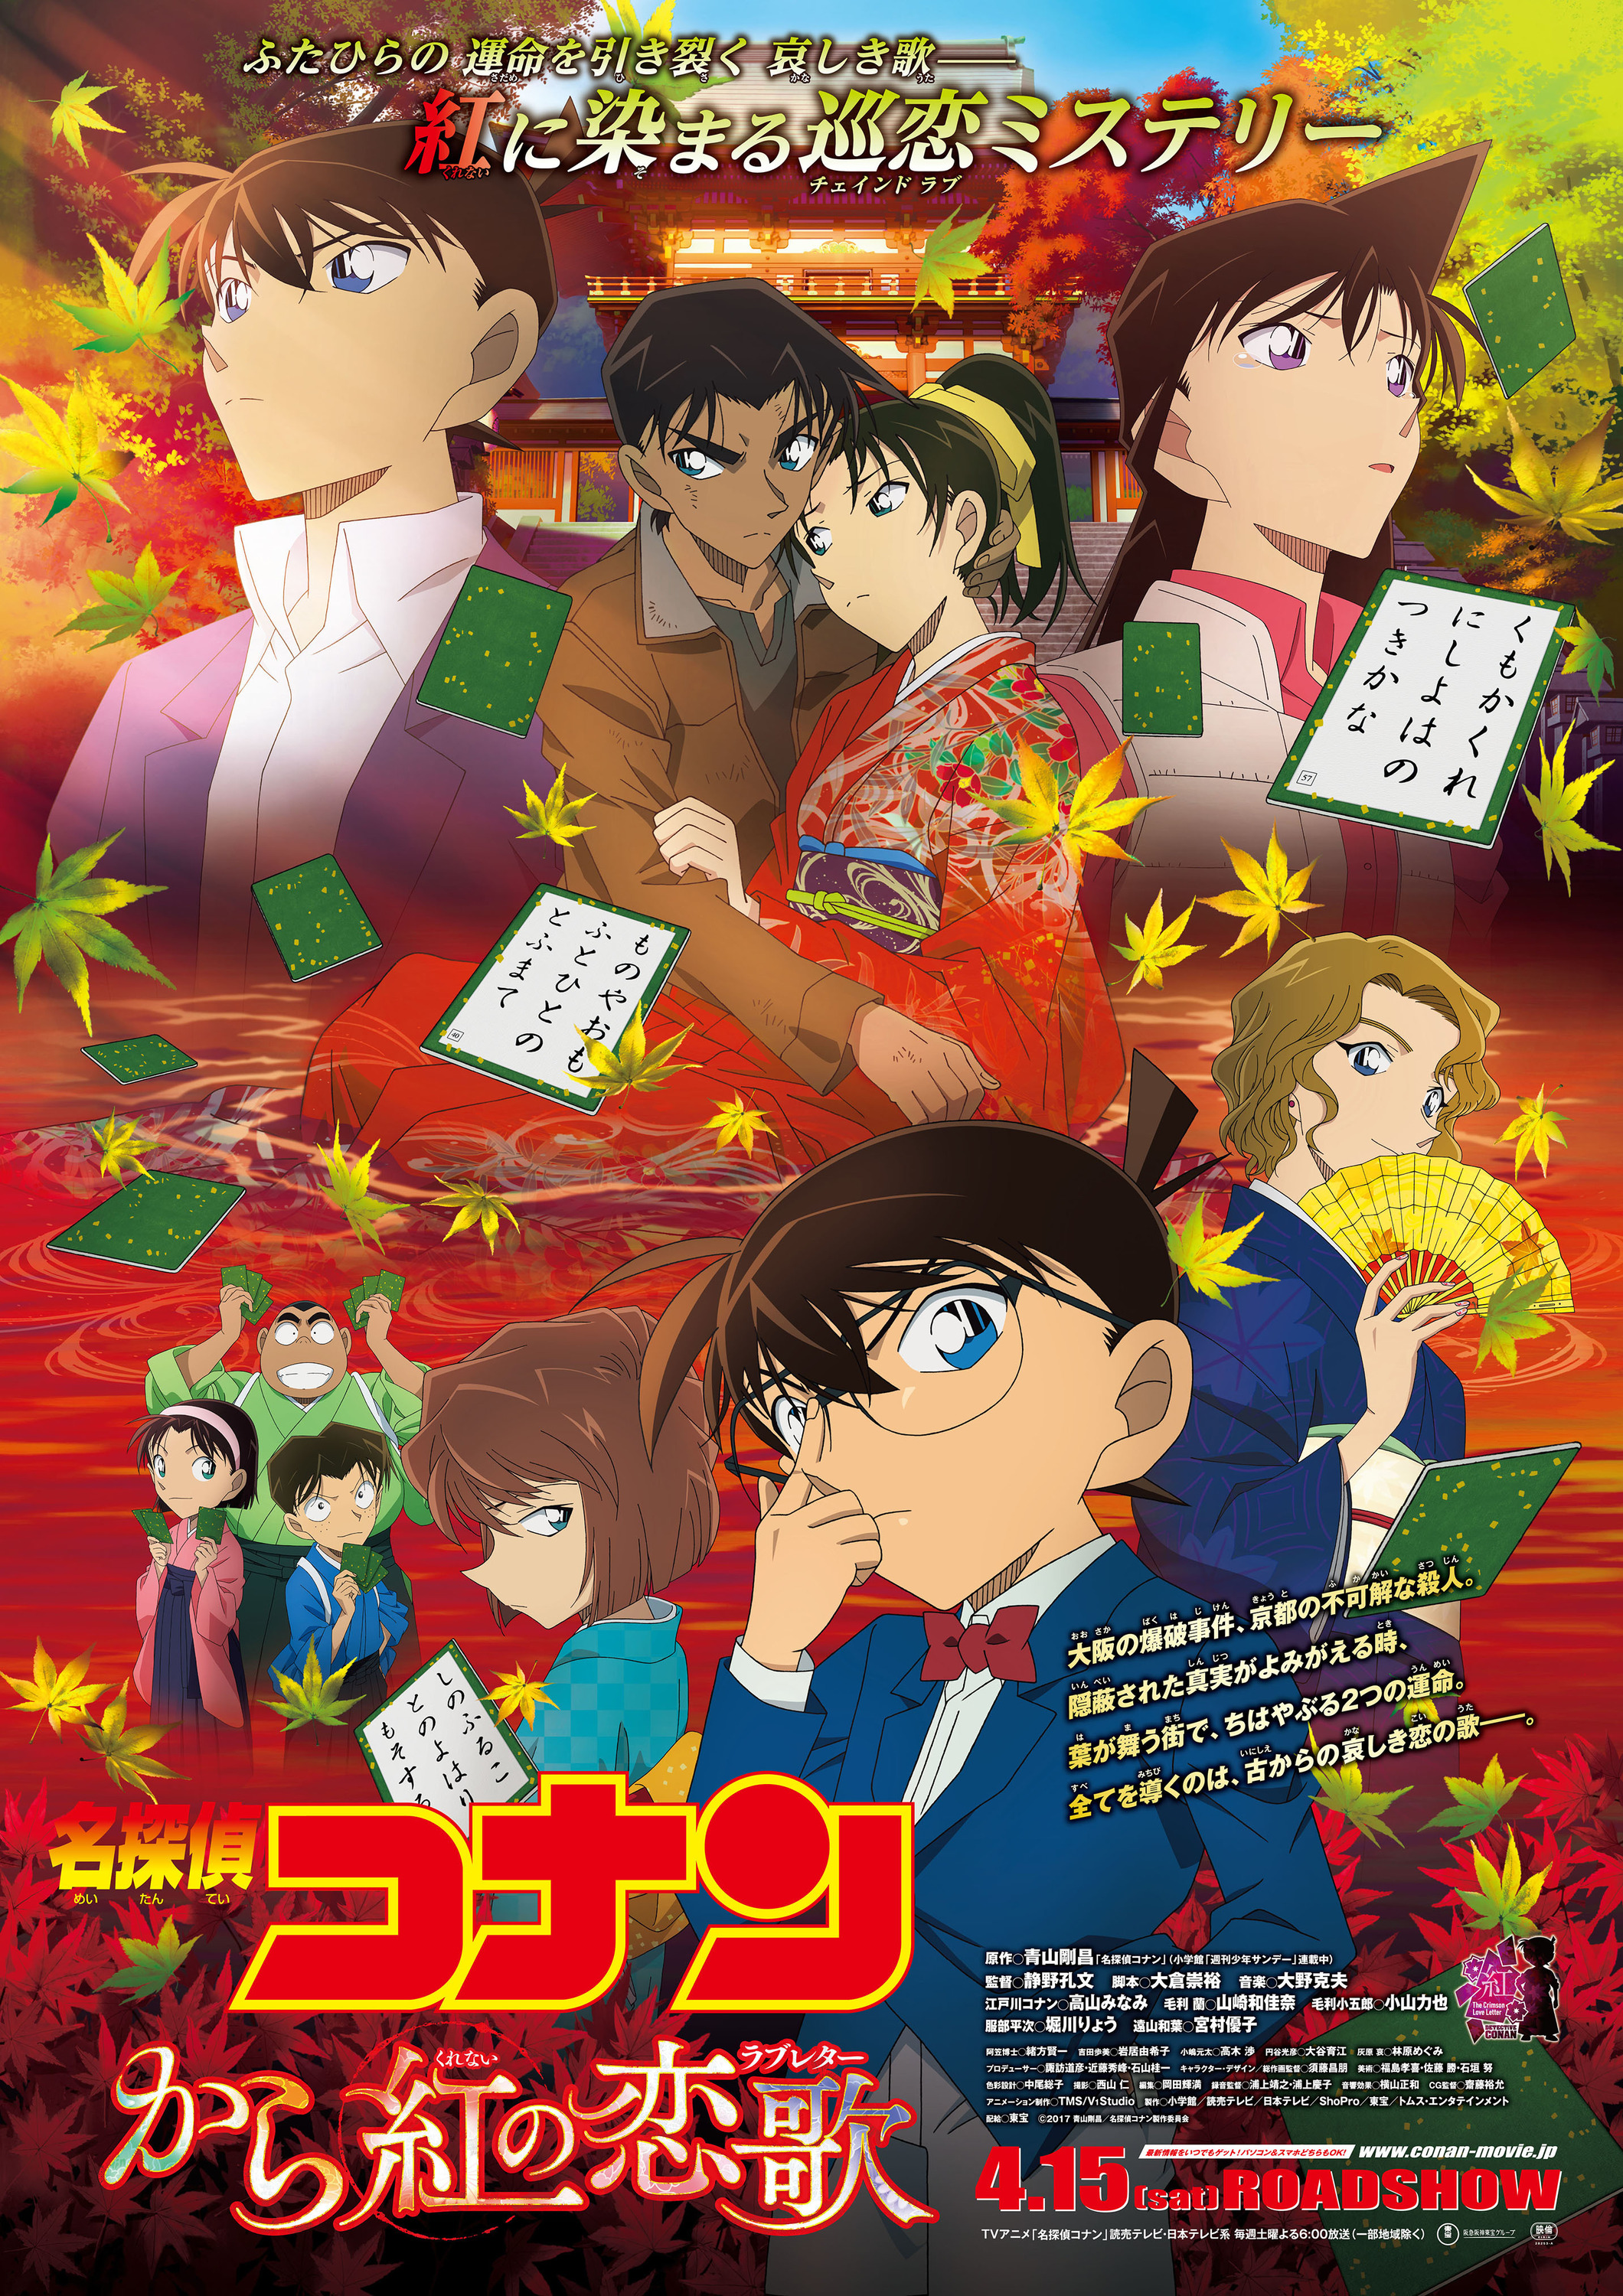 Mega Sized Movie Poster Image for Meitantei Conan: Karakurenai no raburetâ 